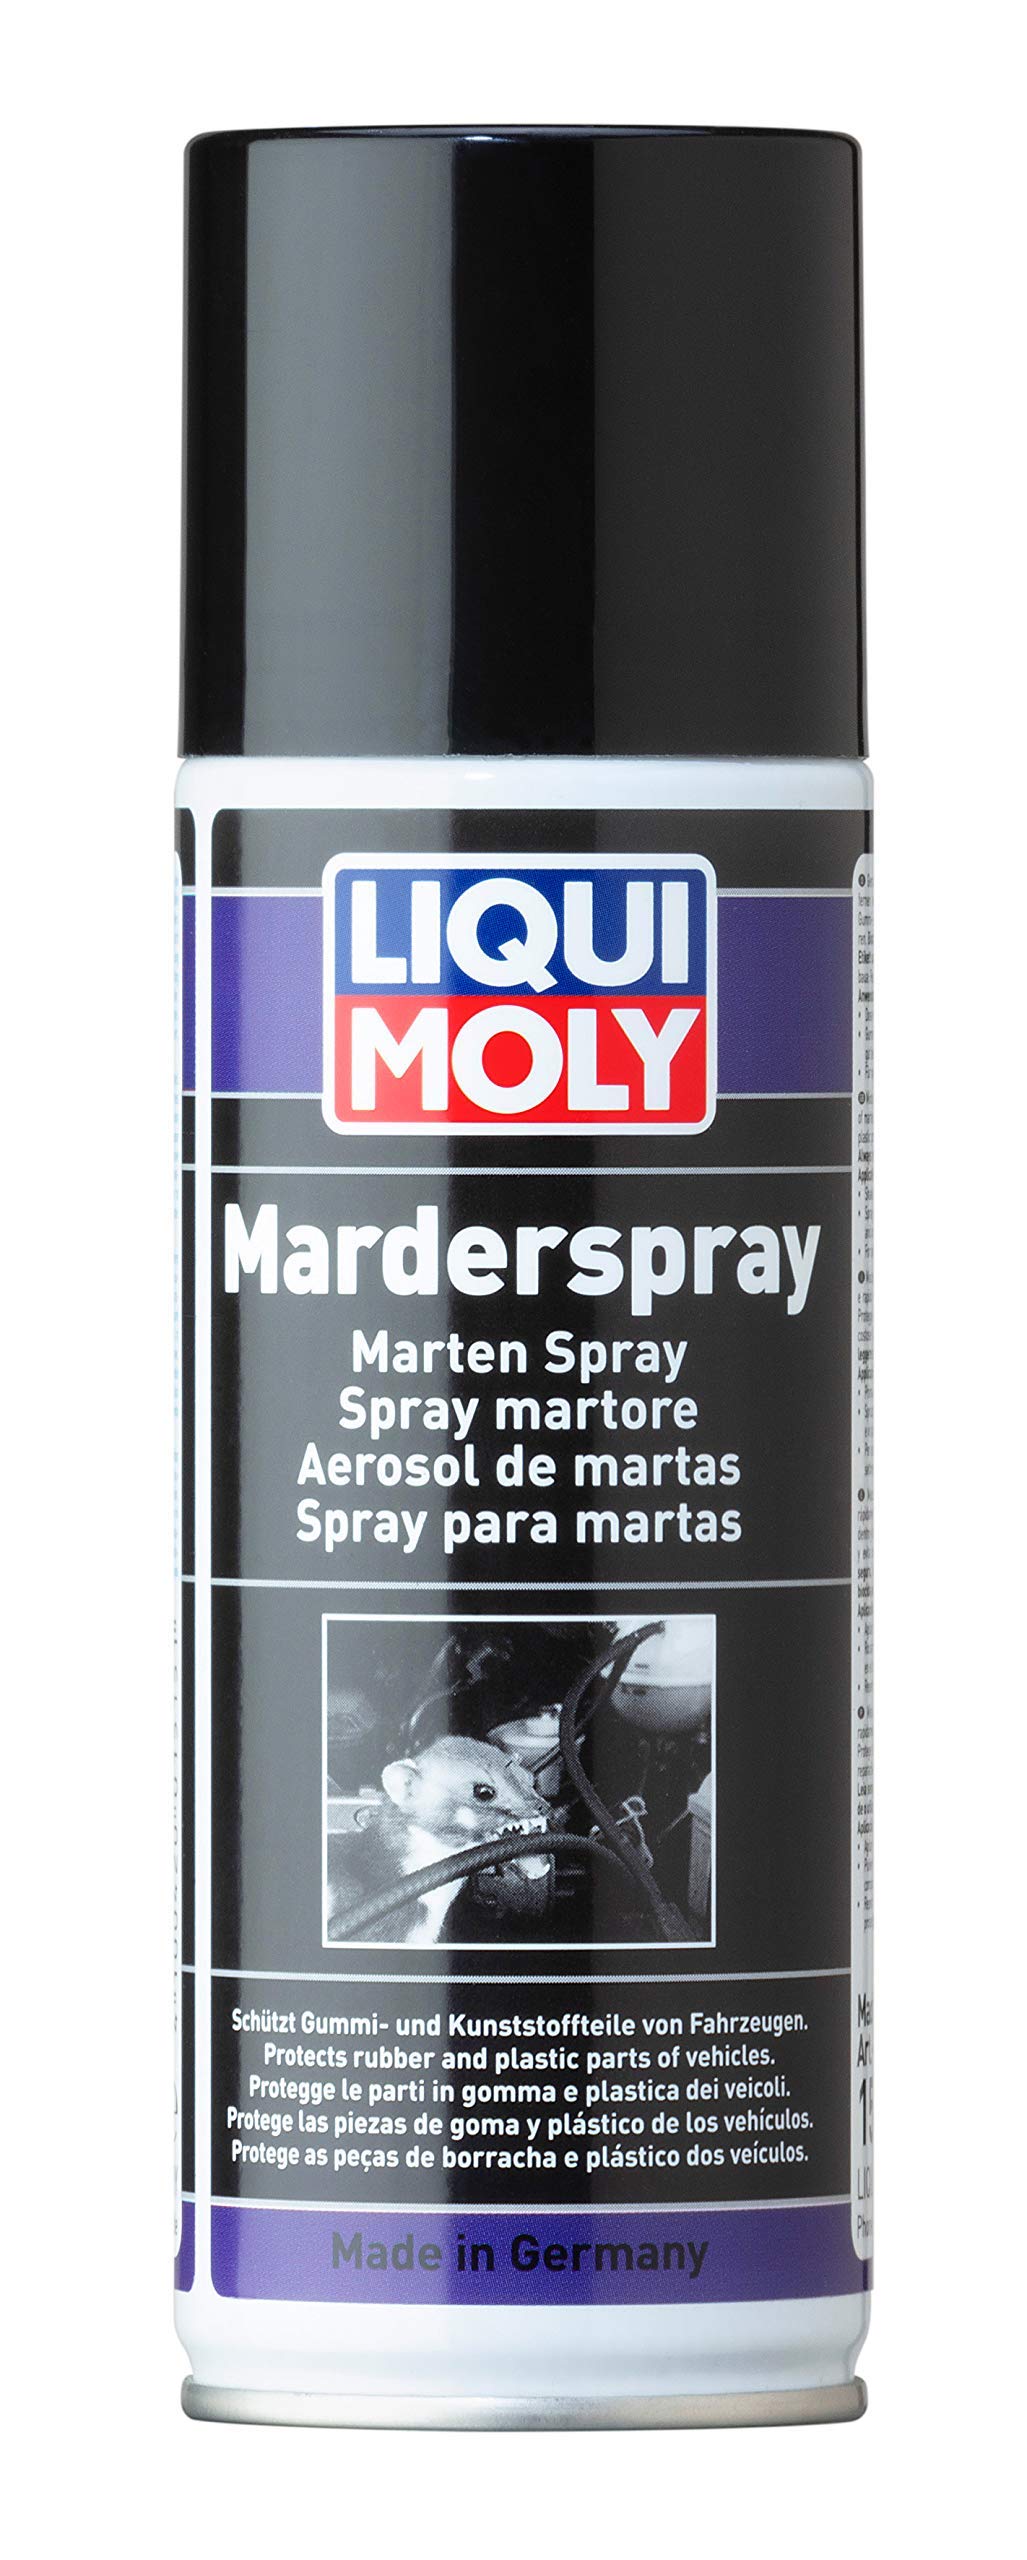 LIQUI MOLY 1515 Marderspray 200 ml von Liqui Moly